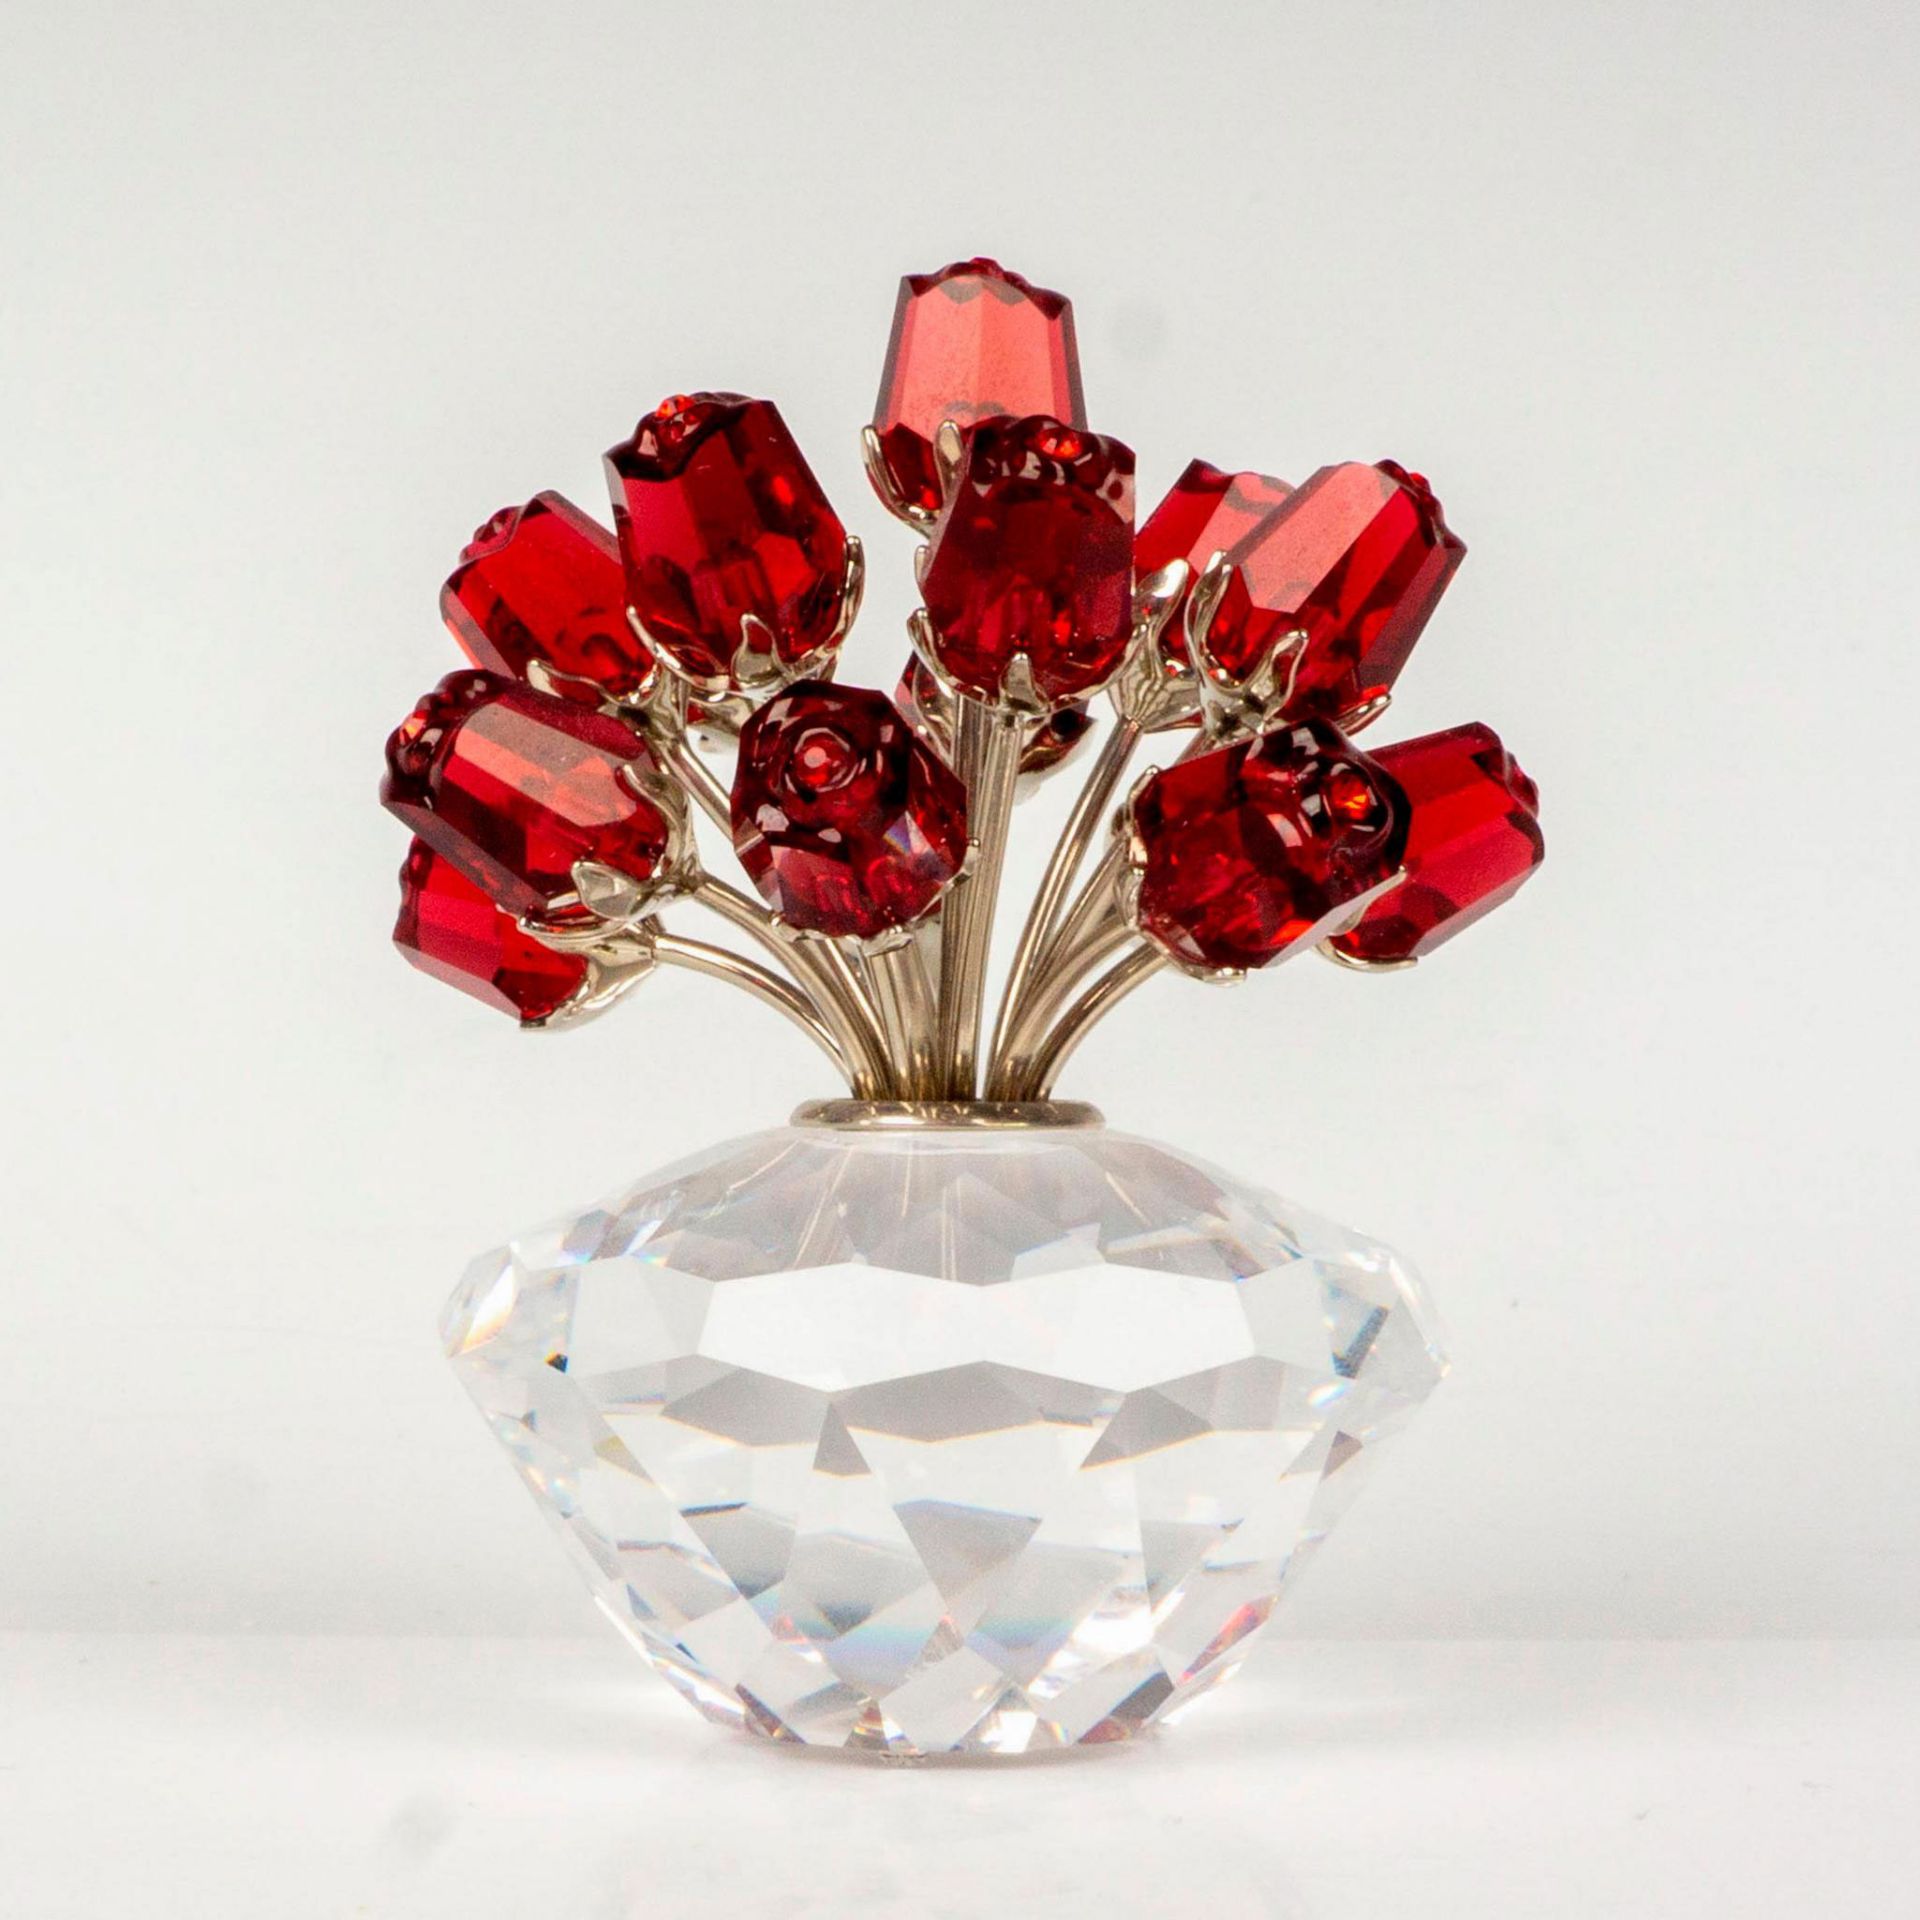 Swarovski Crystal Figurine, Vase of Red Roses - Image 2 of 3